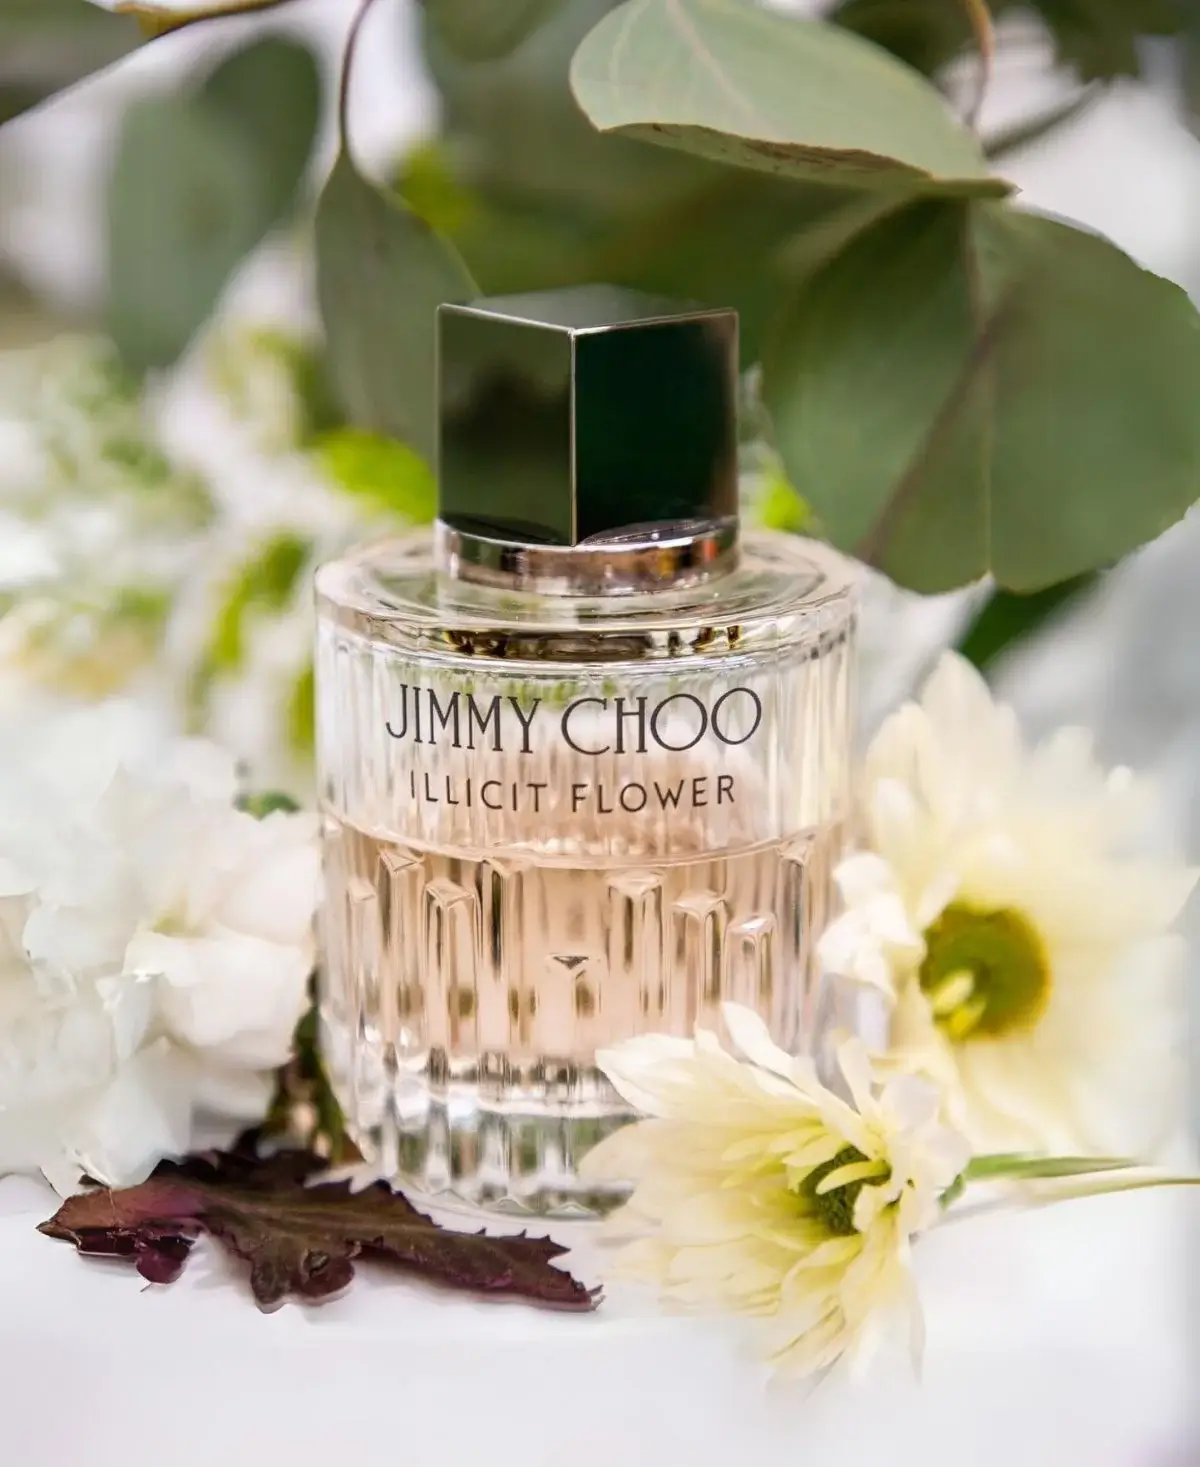 Jimmy Choo Illicit Flower for Women Eau de Toilette (EDT) Spray